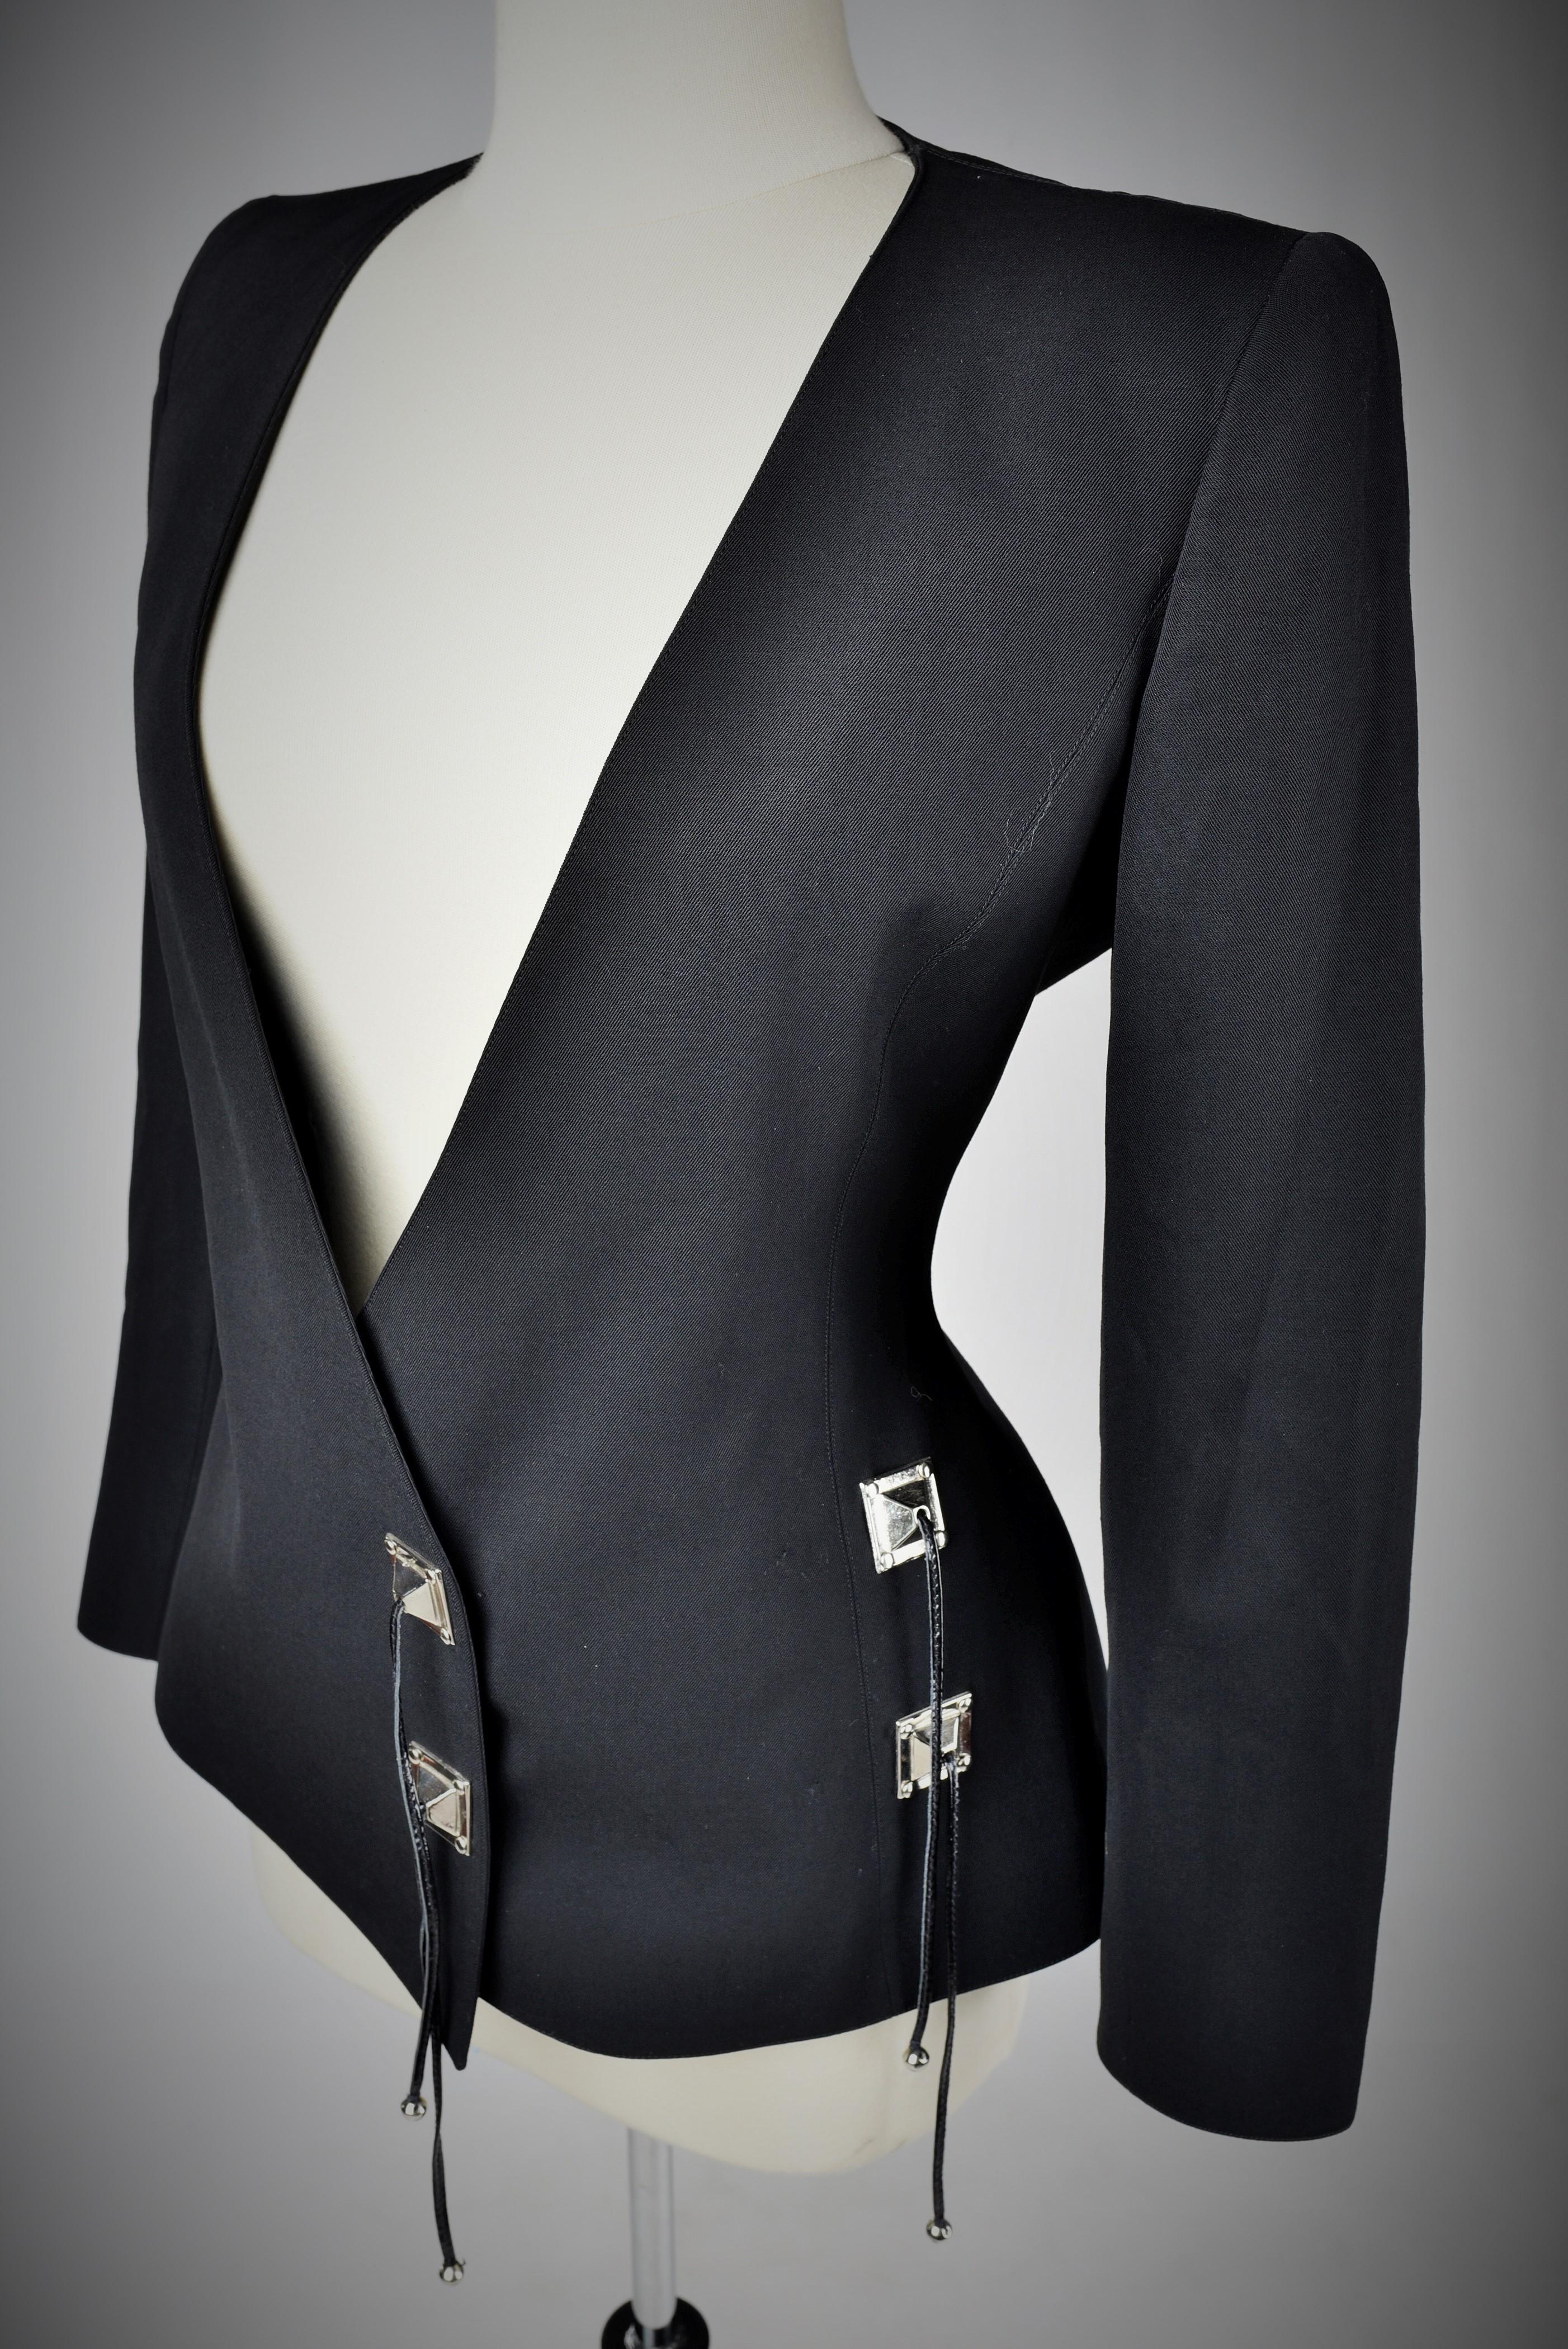 Black Tergal Tuxedo Jacket by Claude Montana Circa 1990 For Sale 3